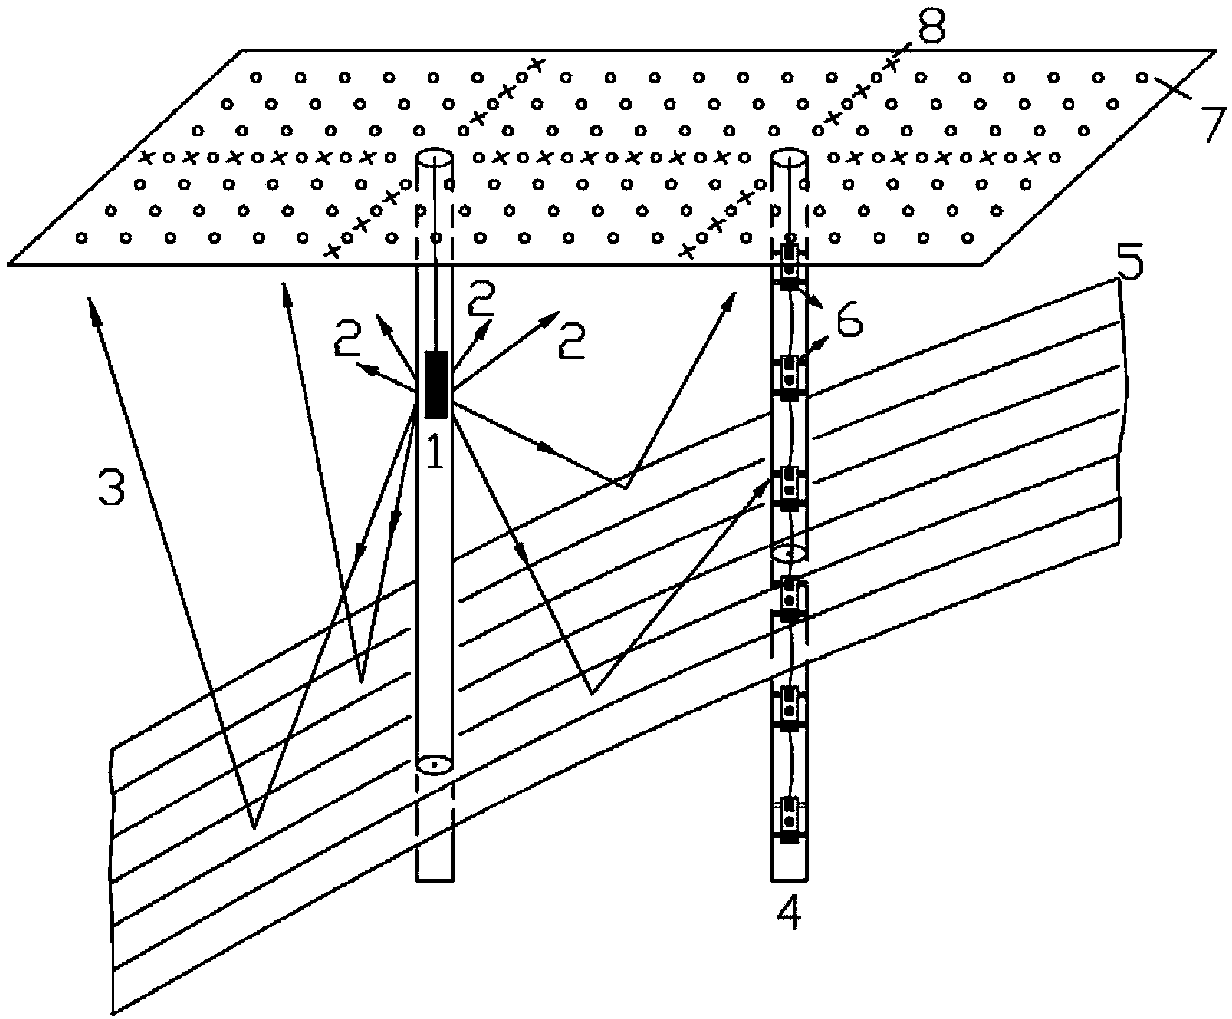 Earthquake wave underground construction space observation system and method based on random arrangement